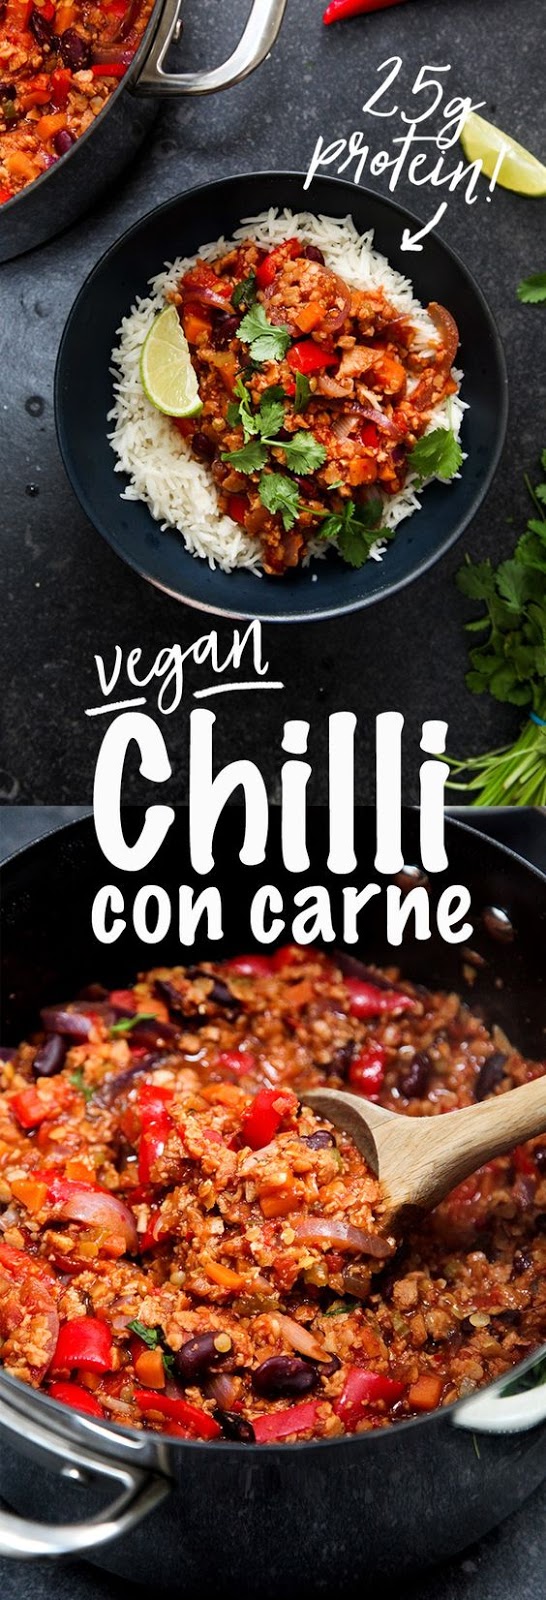 EASY VEGAN CHILLI SIN CARNE #easyveganrecipes #vegan #veganrecipes #chilli #sin #carne #veganchilli